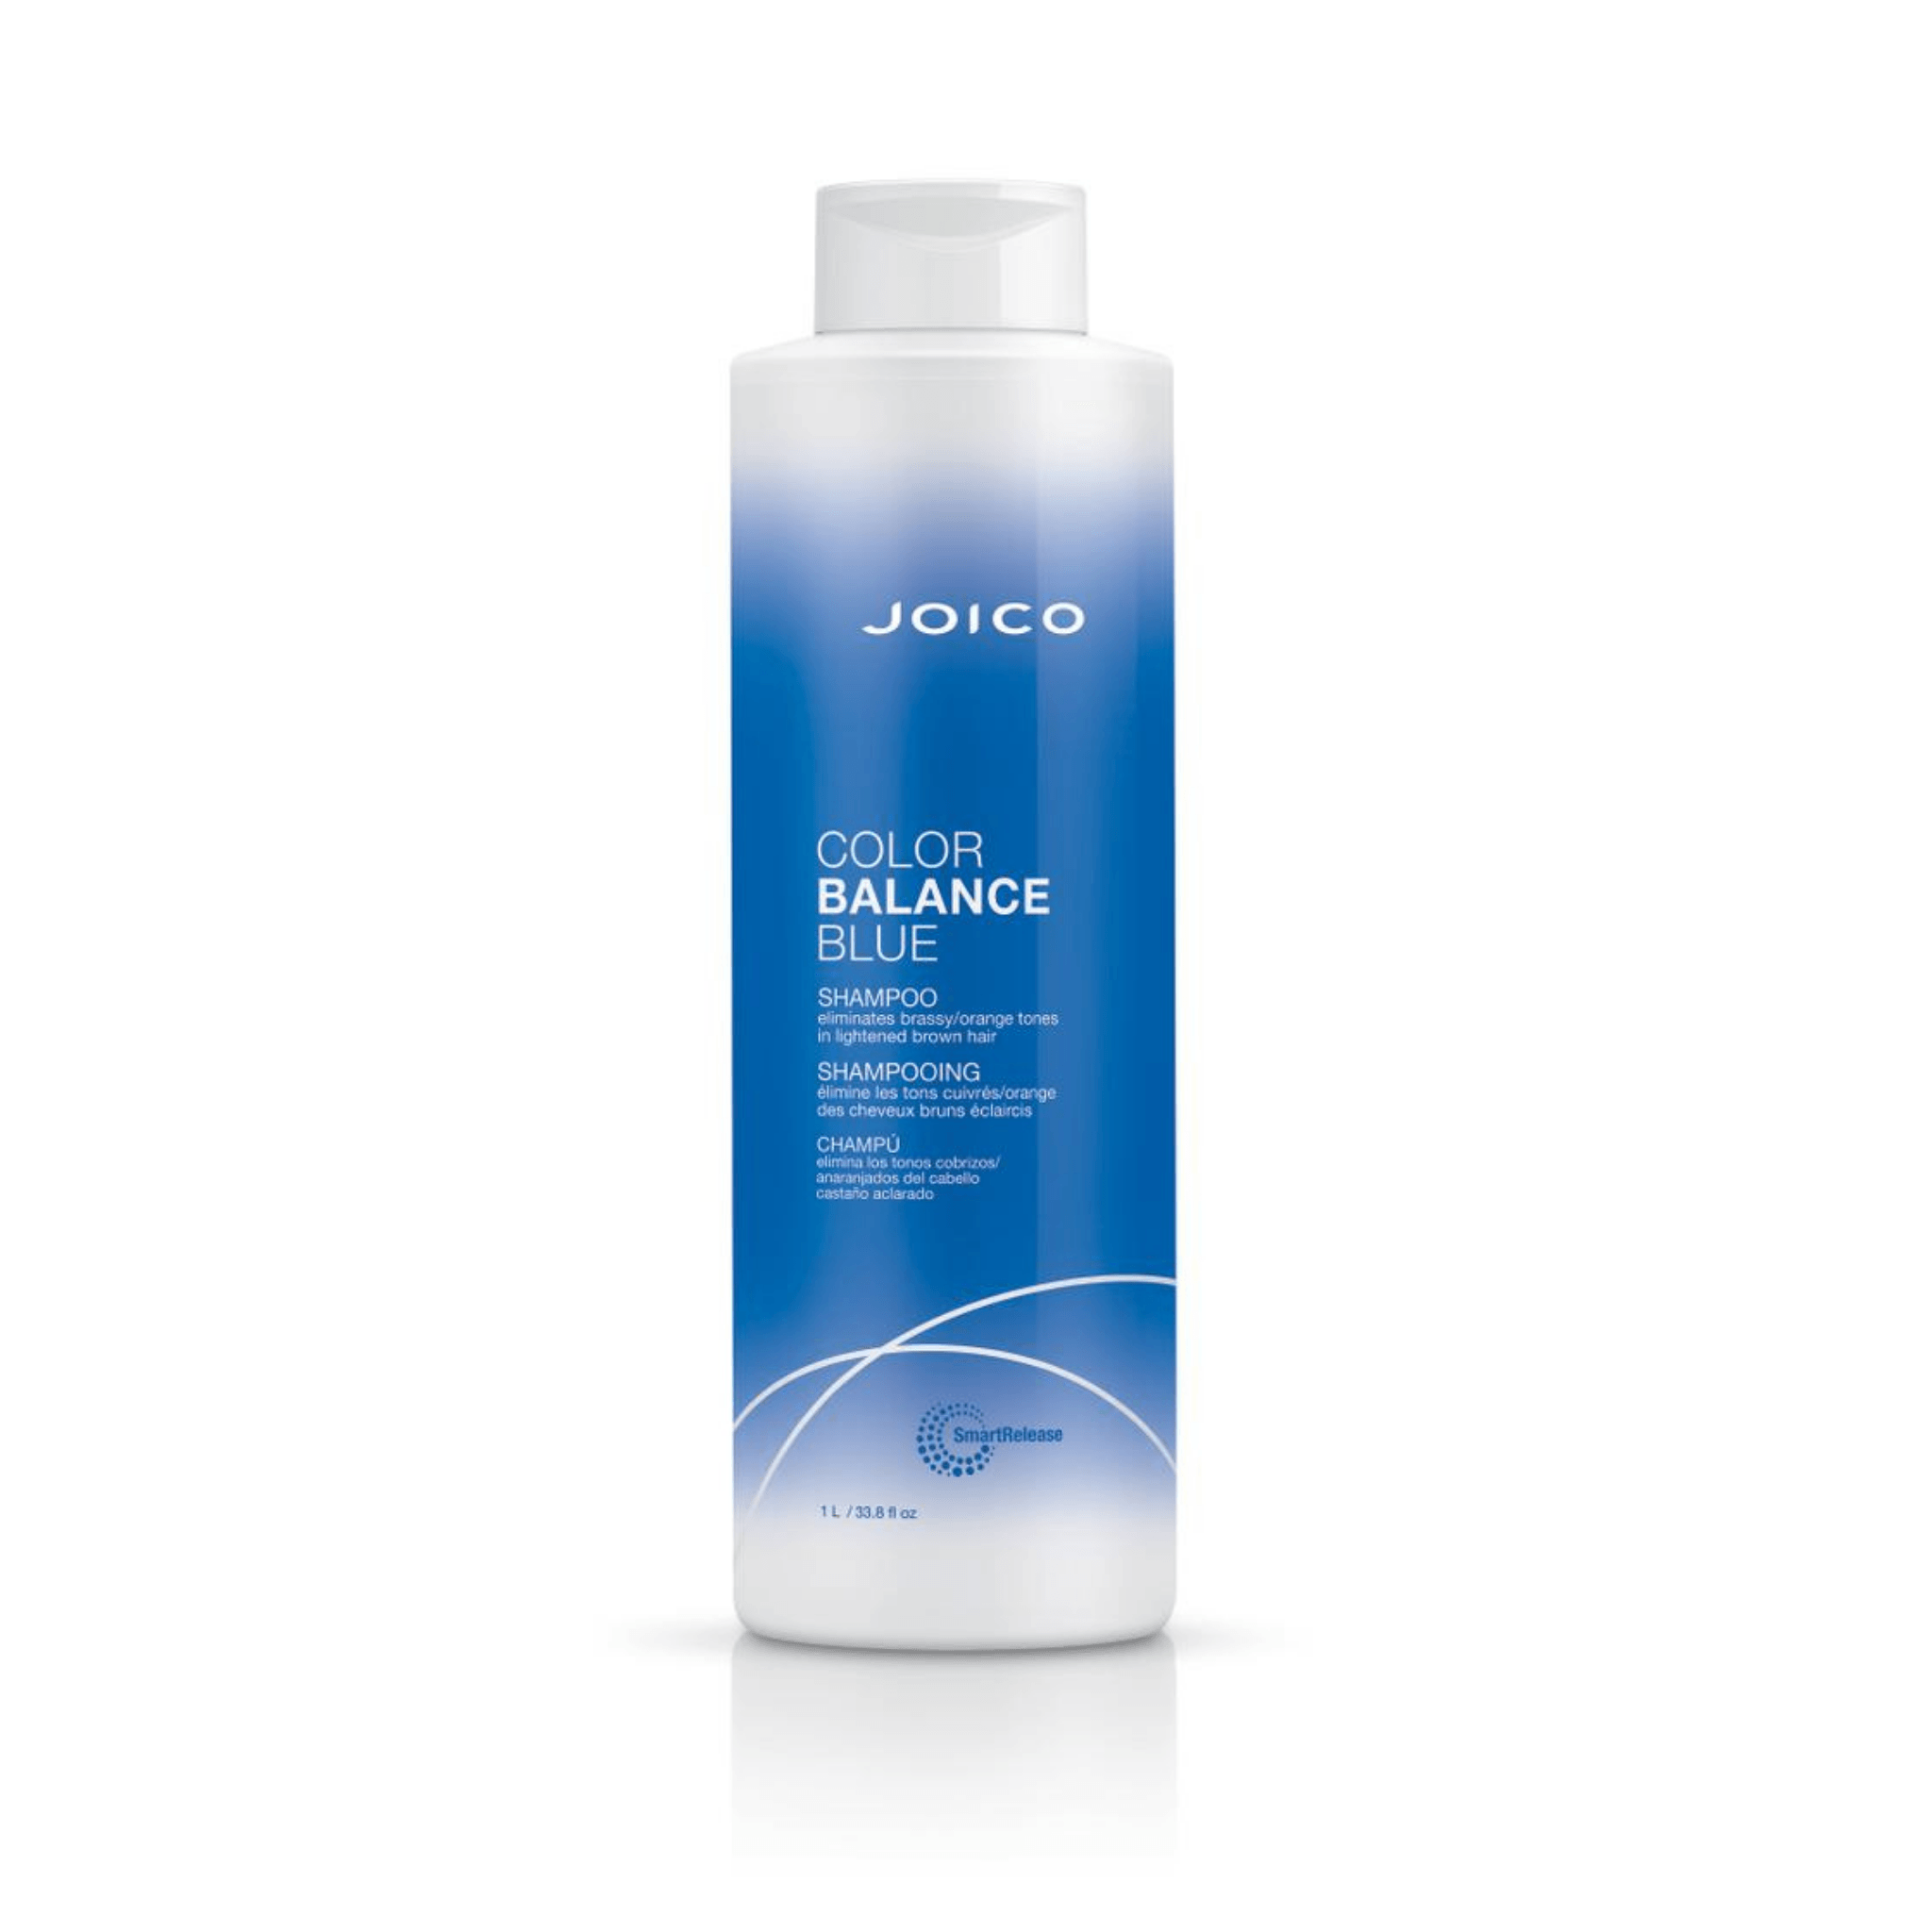 Joico. Shampoing Bleu Color Balance Blue - 1000ml - Concept C. Shop